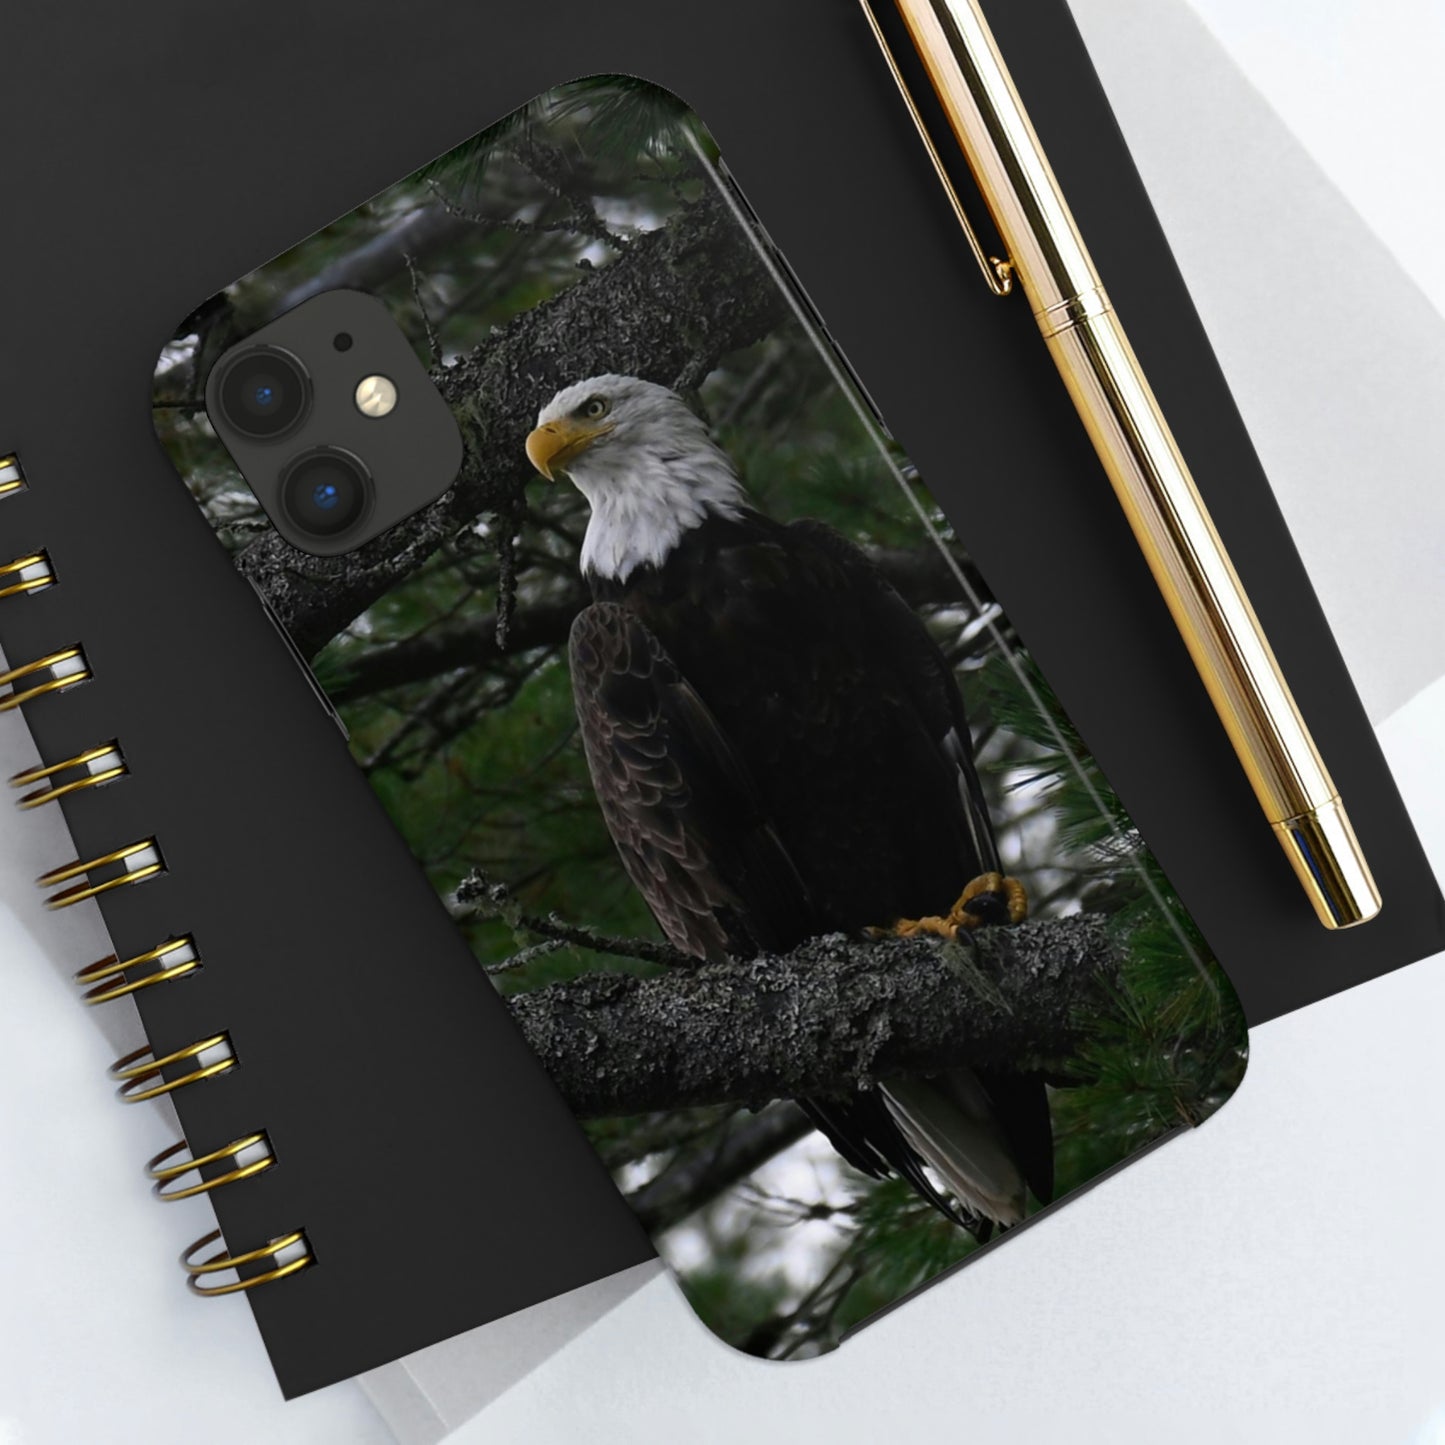 Impact Resistant Phone Case - American Eagle